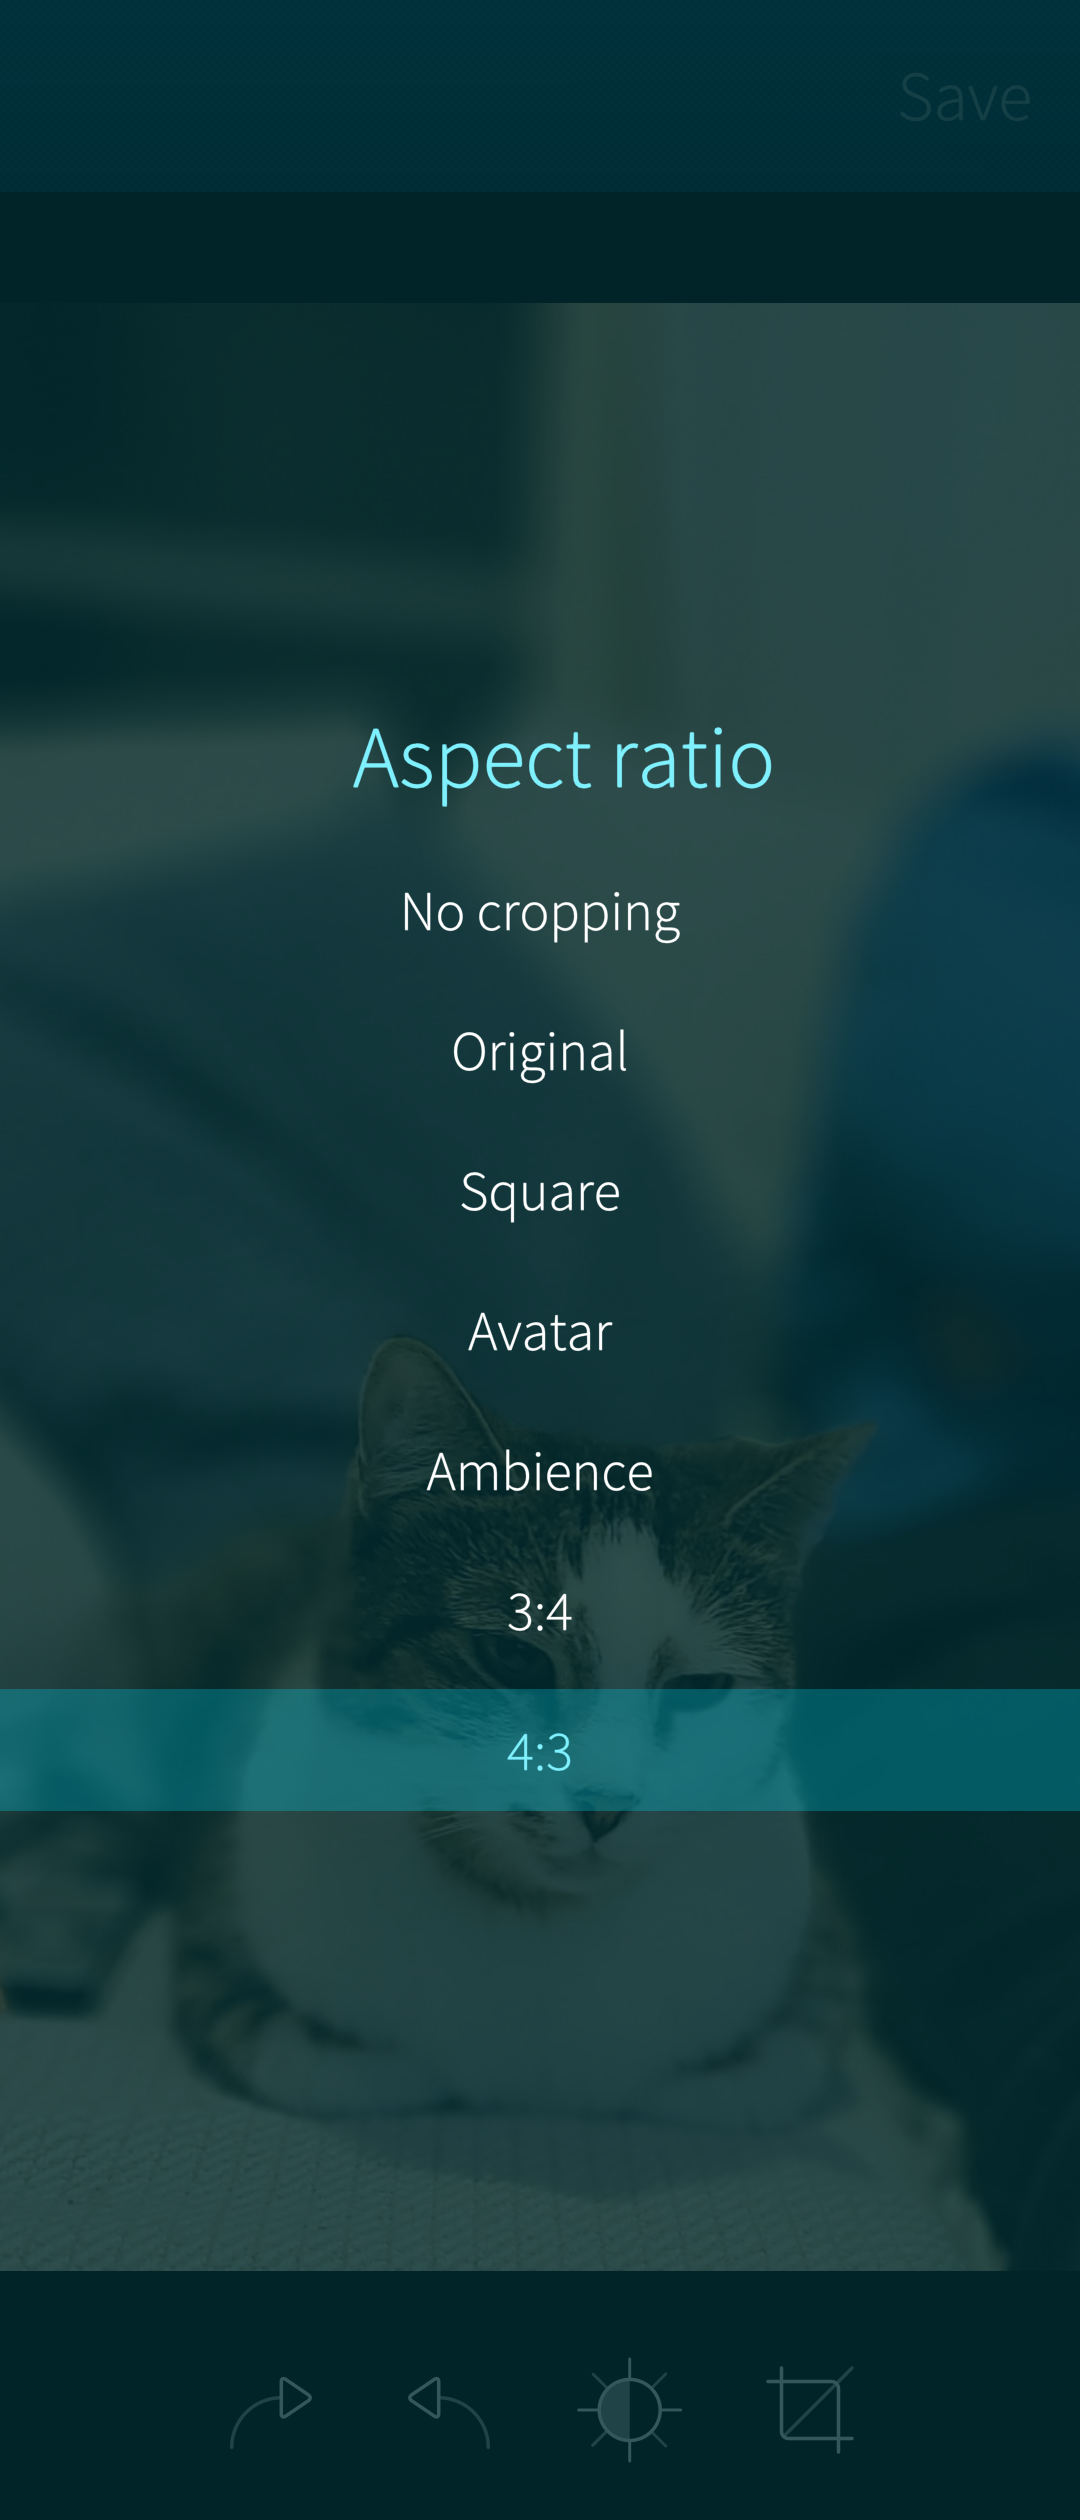 Selecting aspect ratio